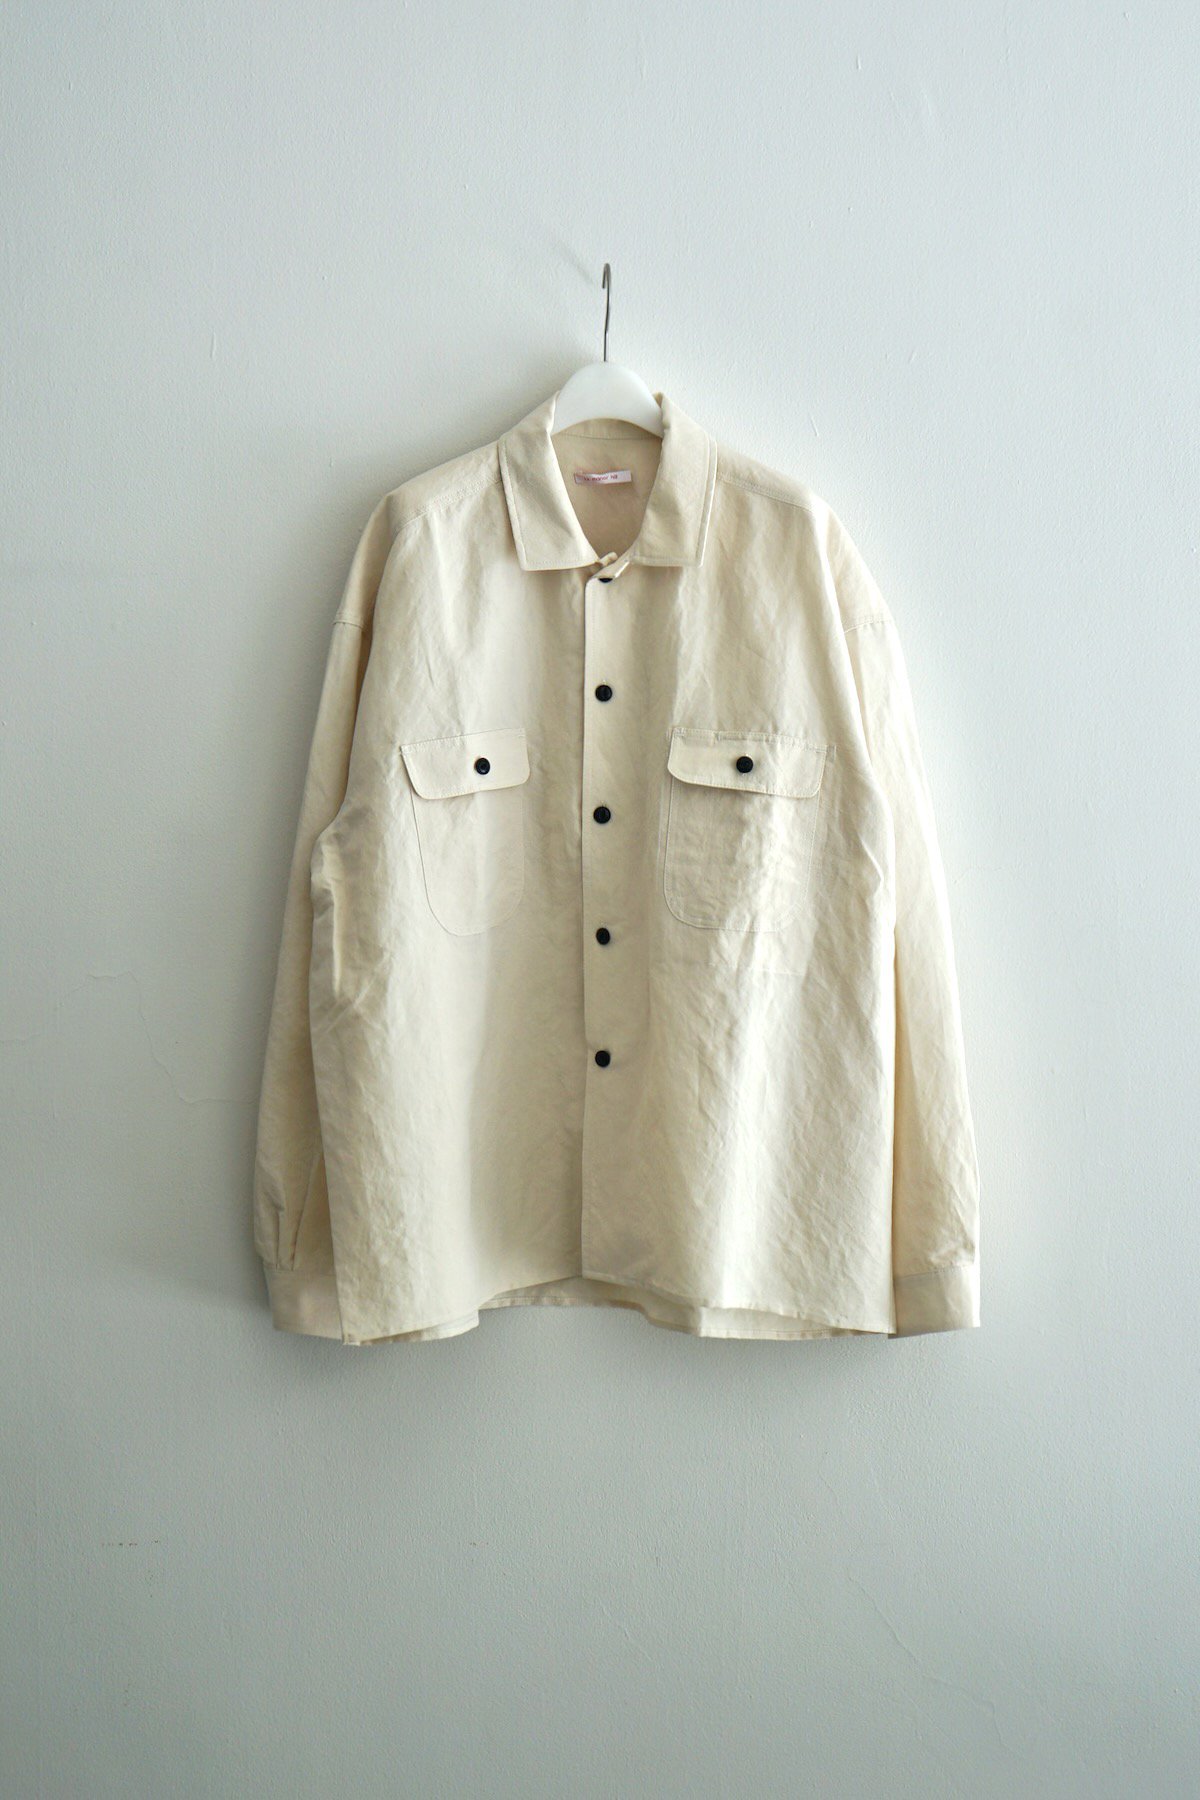 s.k. manor hill / Park Shirt Jacket / Bone Linen Cotton